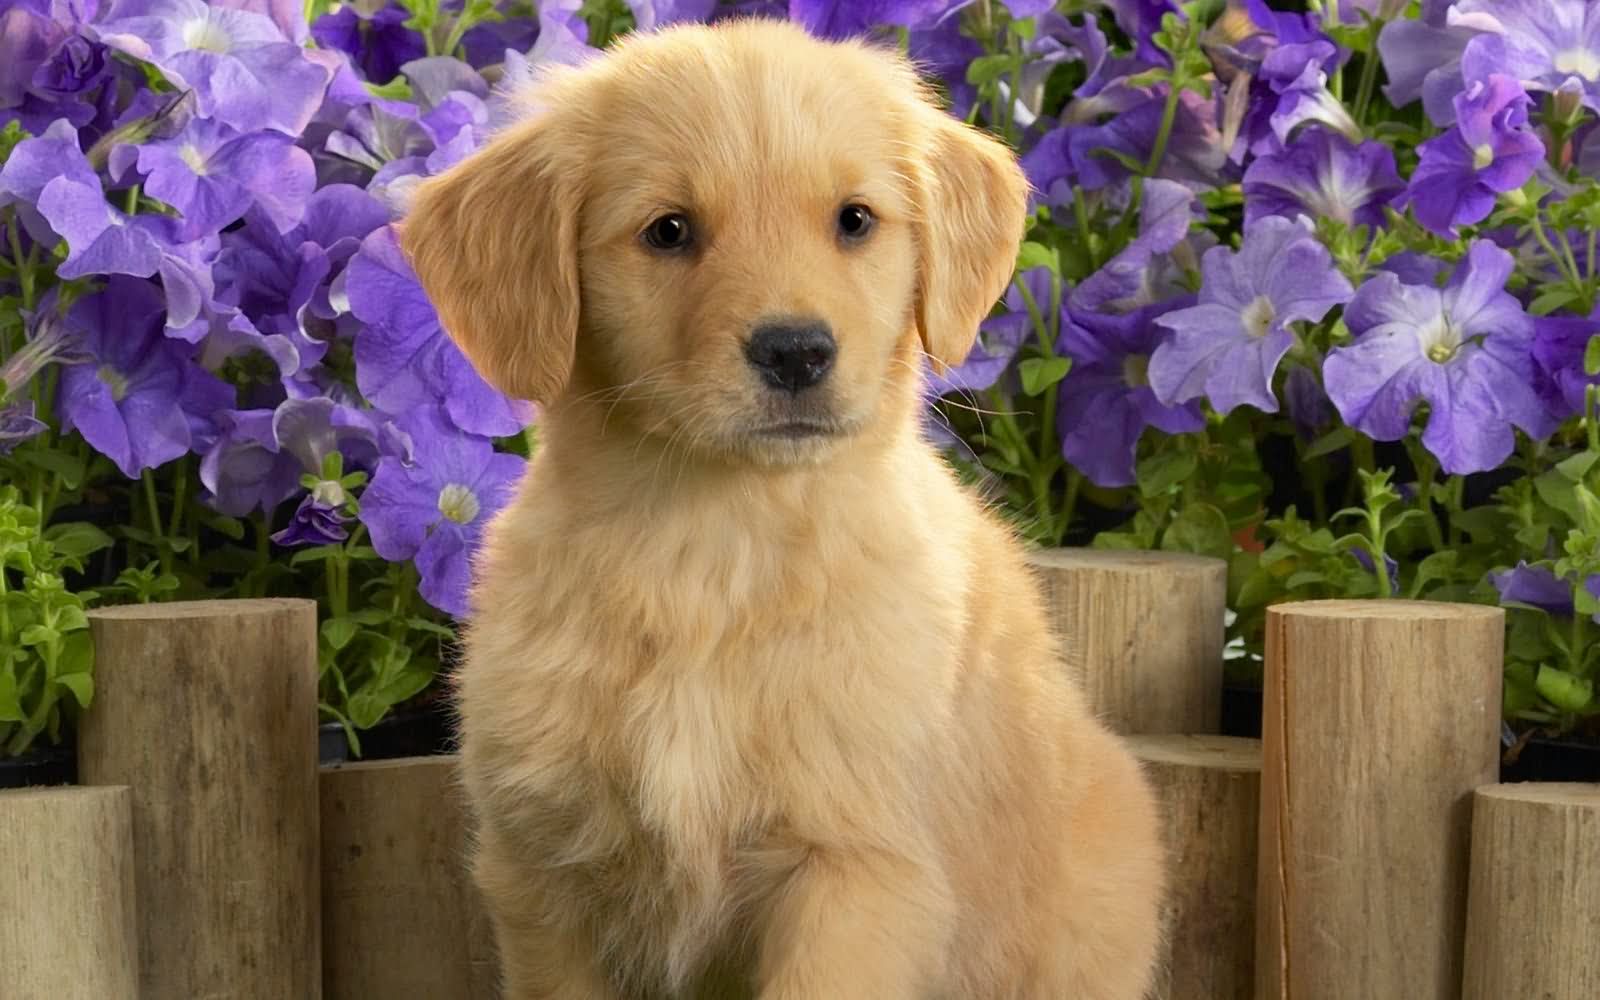 super cute golden retriever puppies